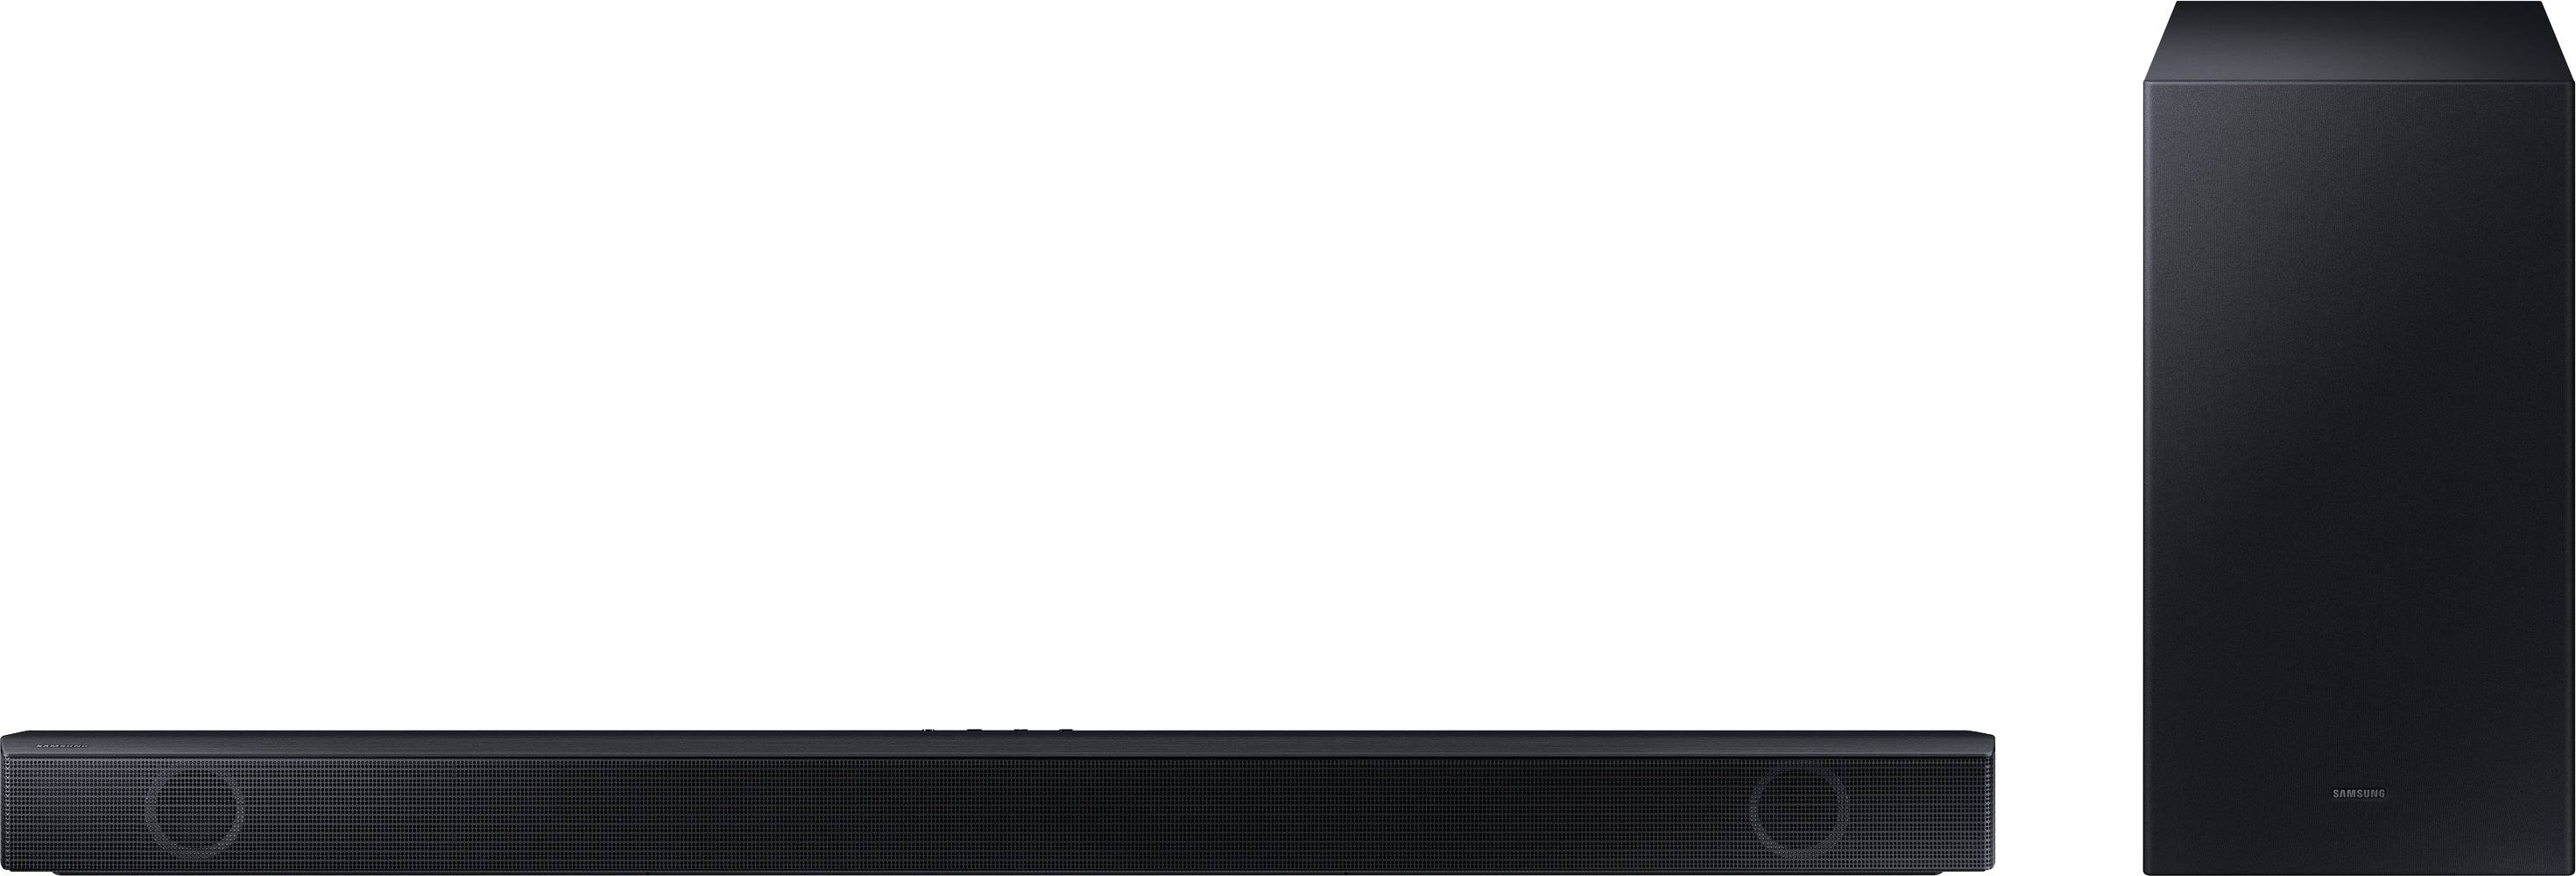 Assassin spids Derivation Samsung HW-B560 Soundbar Black Bluetooth, incl. cordless subwoofer, USB |  Conrad.com